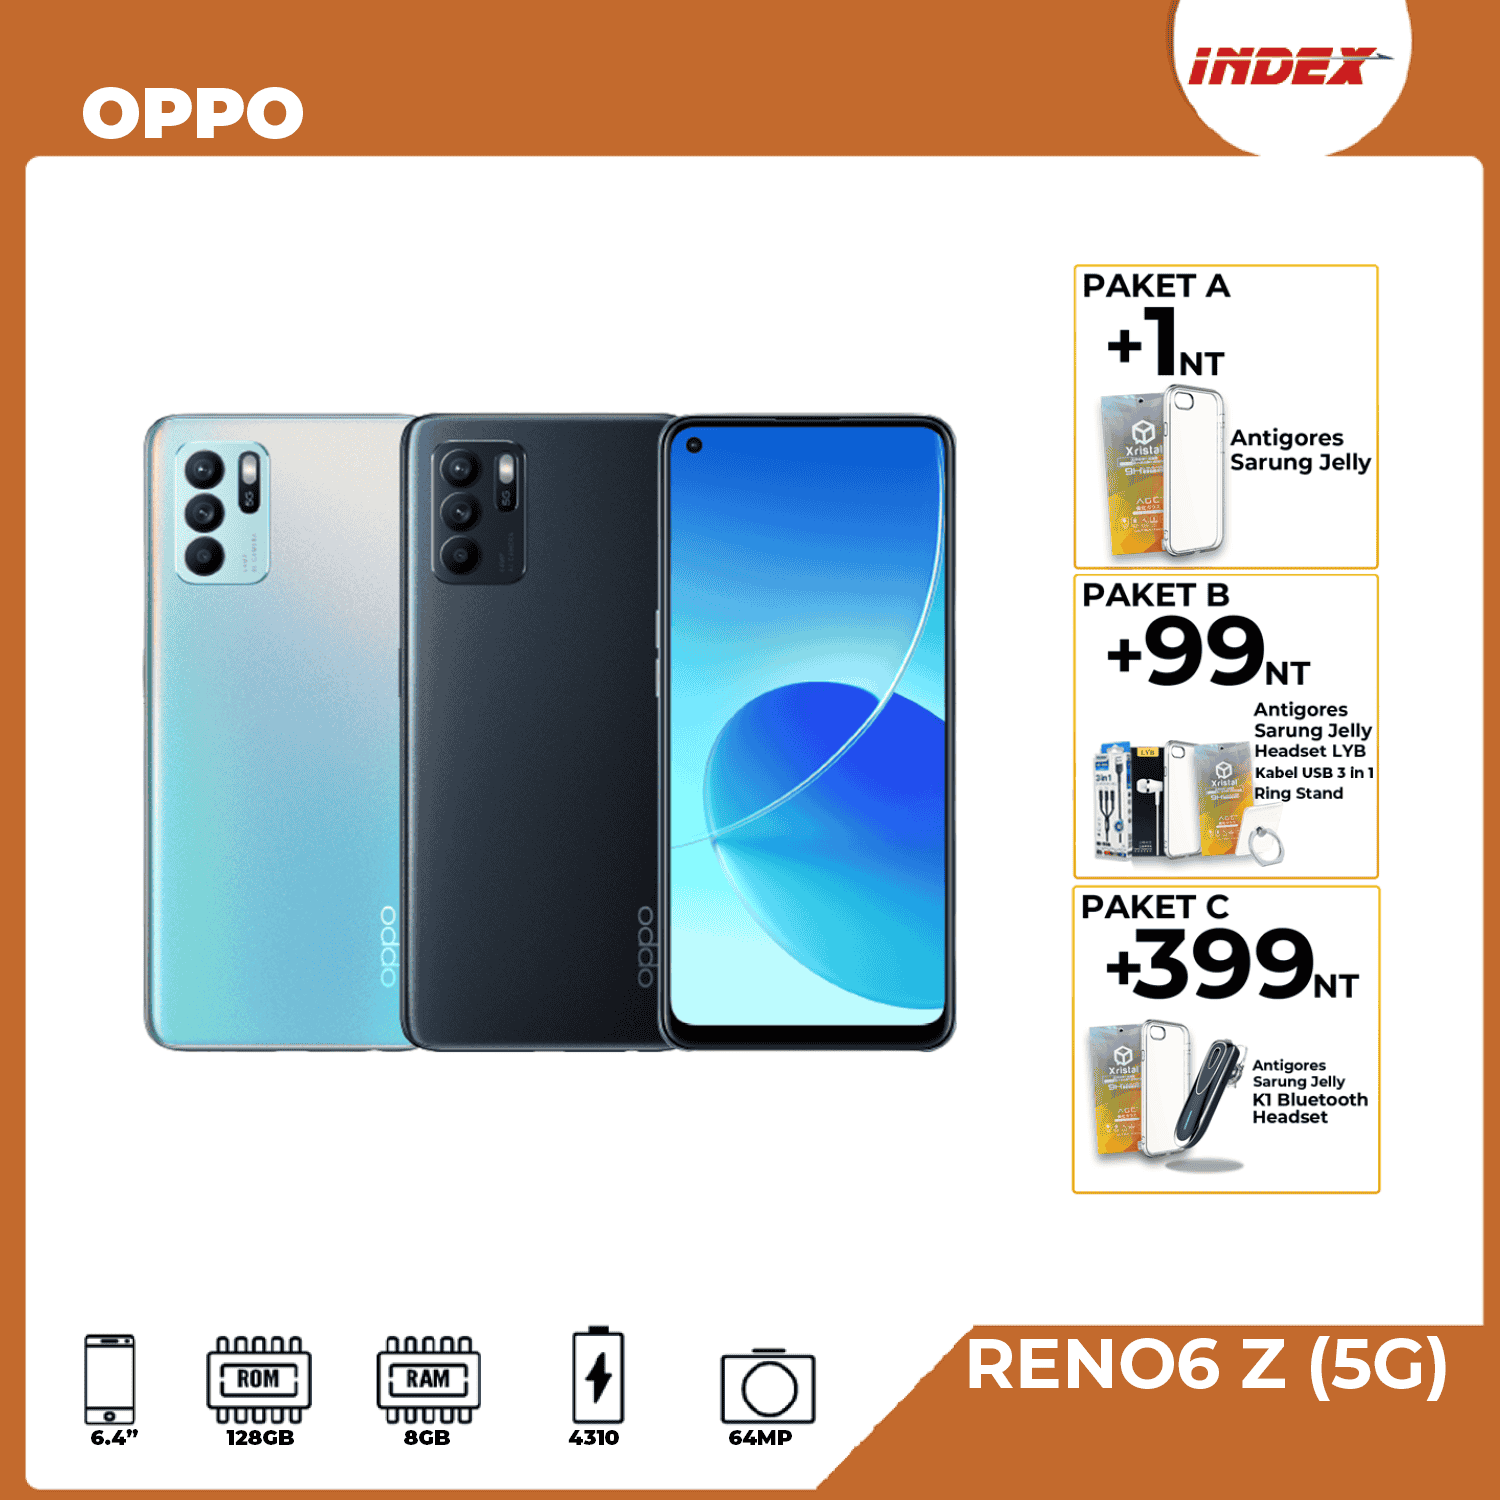 OPPO RENO6 Z (5G) 8GB/128GB